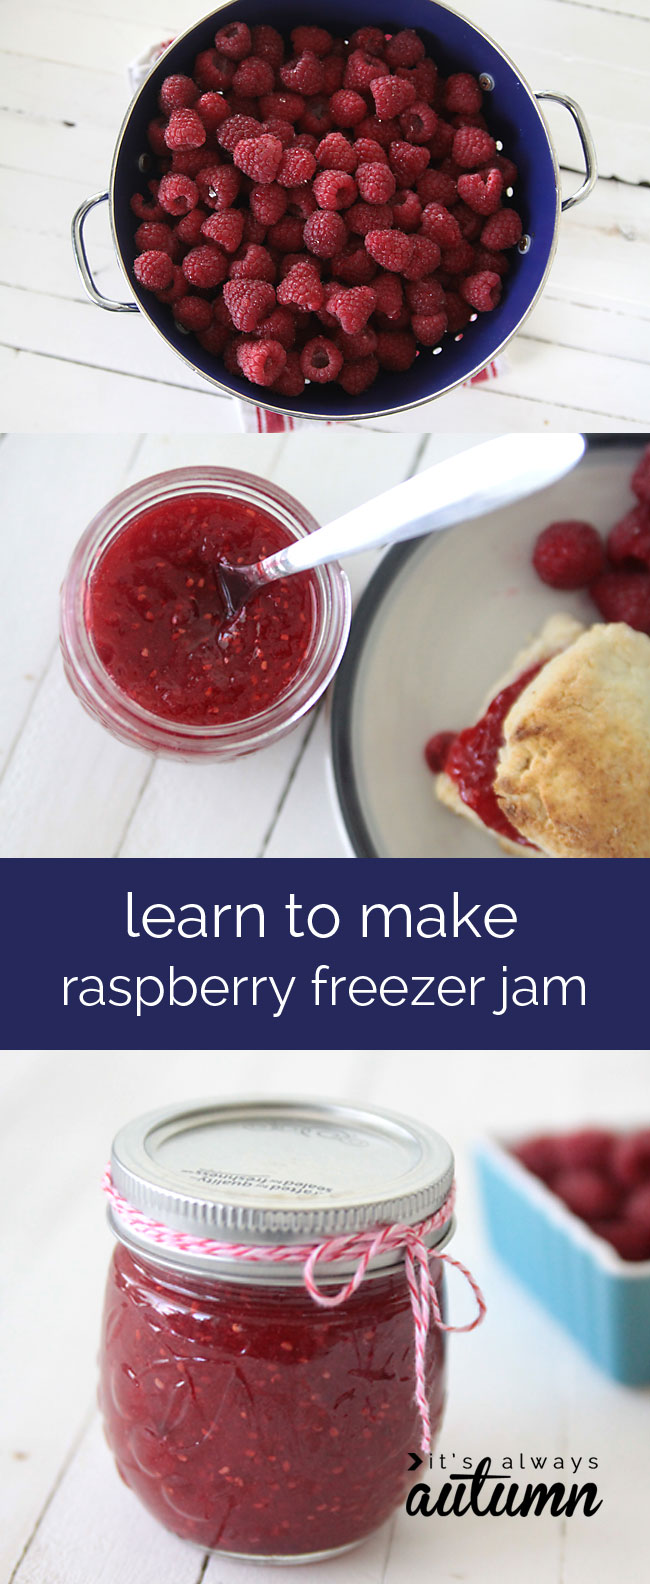 Raspberries and homemade raspberry freezer jam